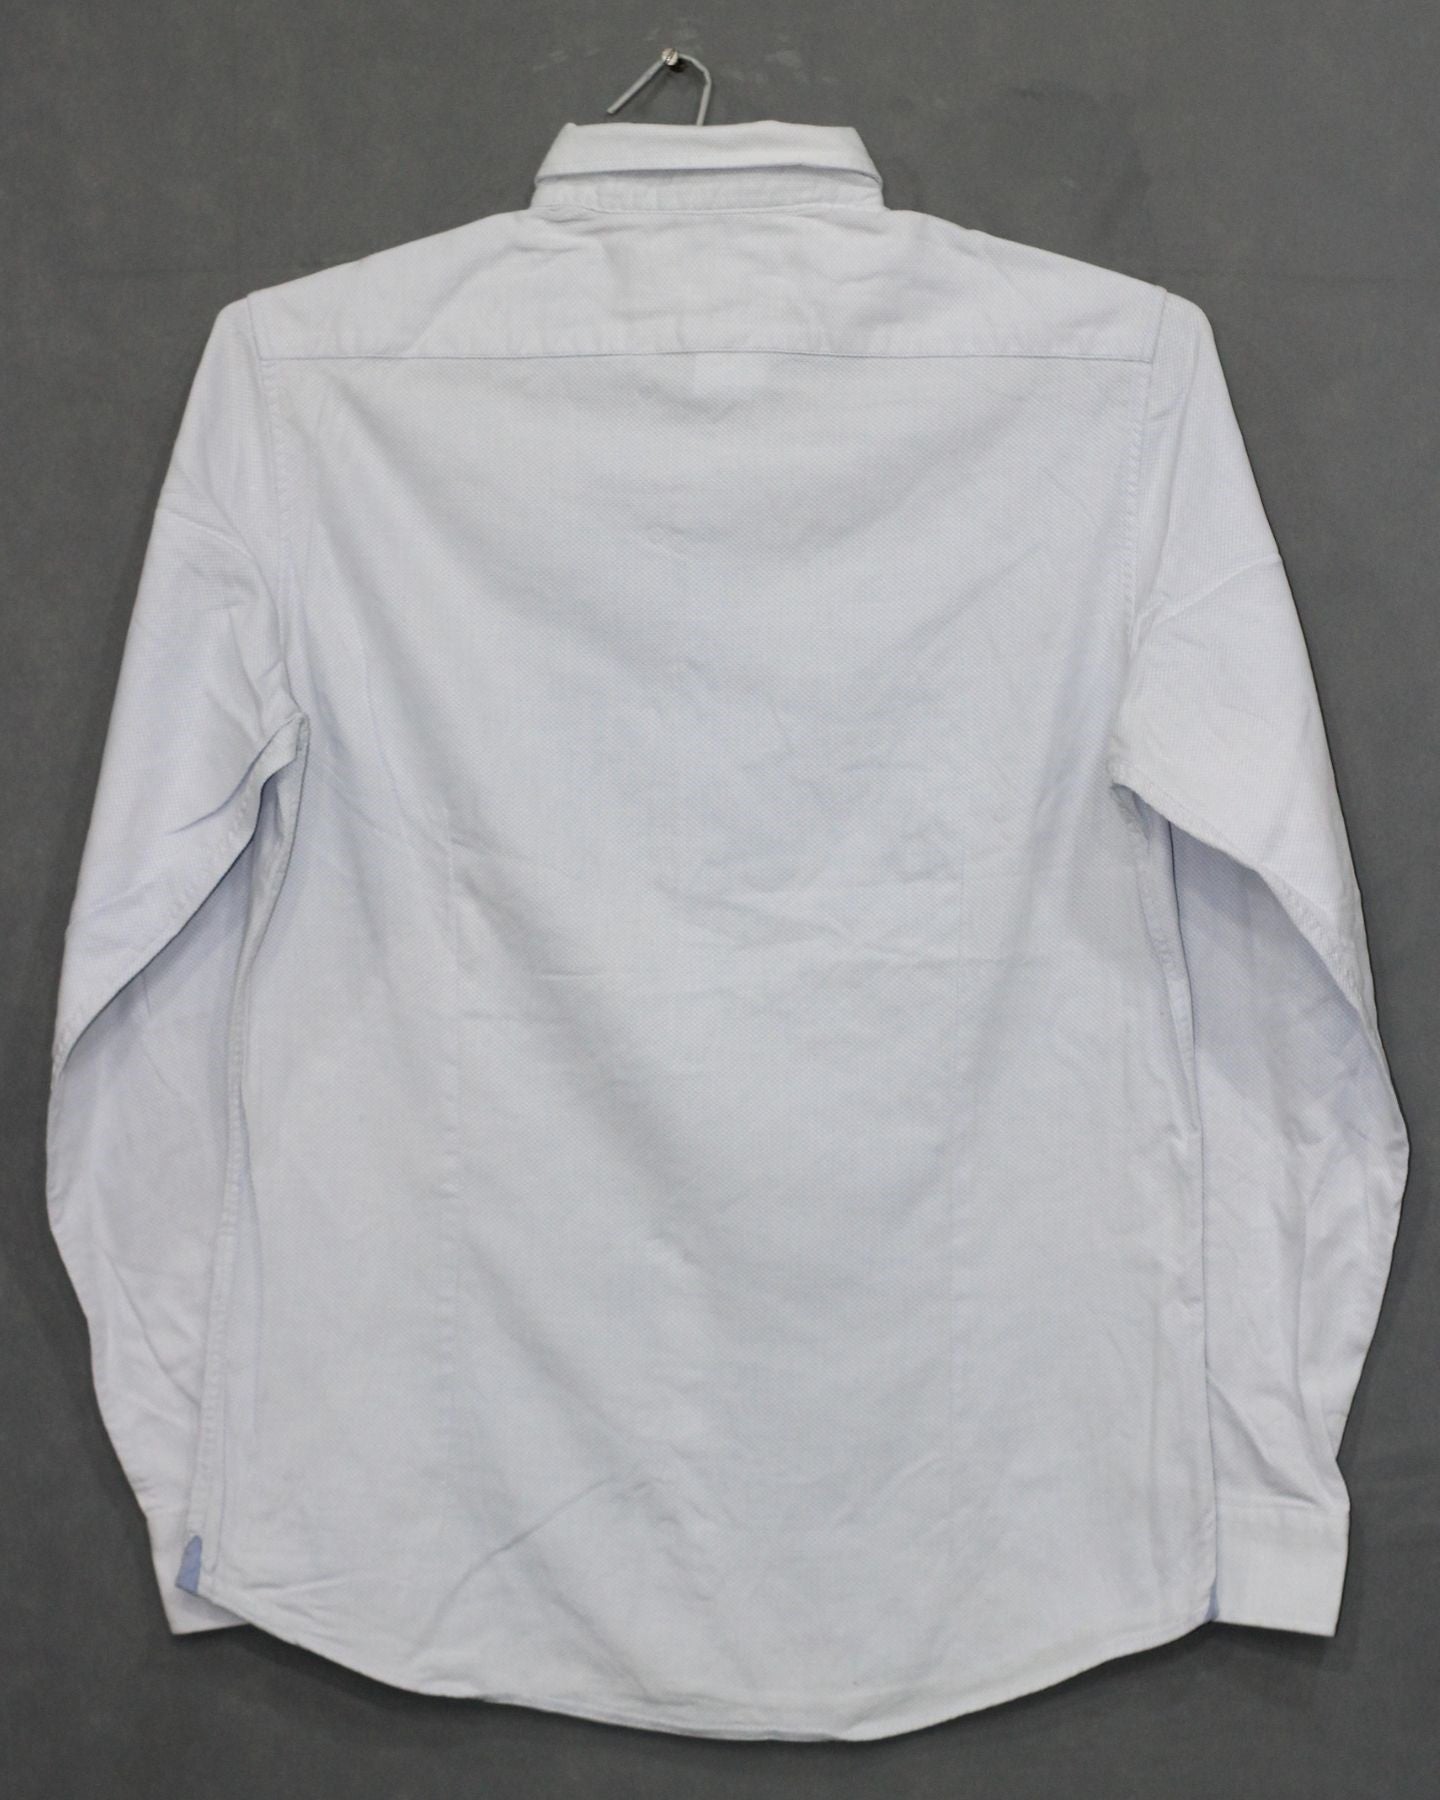 Sfera Man Branded Original Cotton Shirt For Men